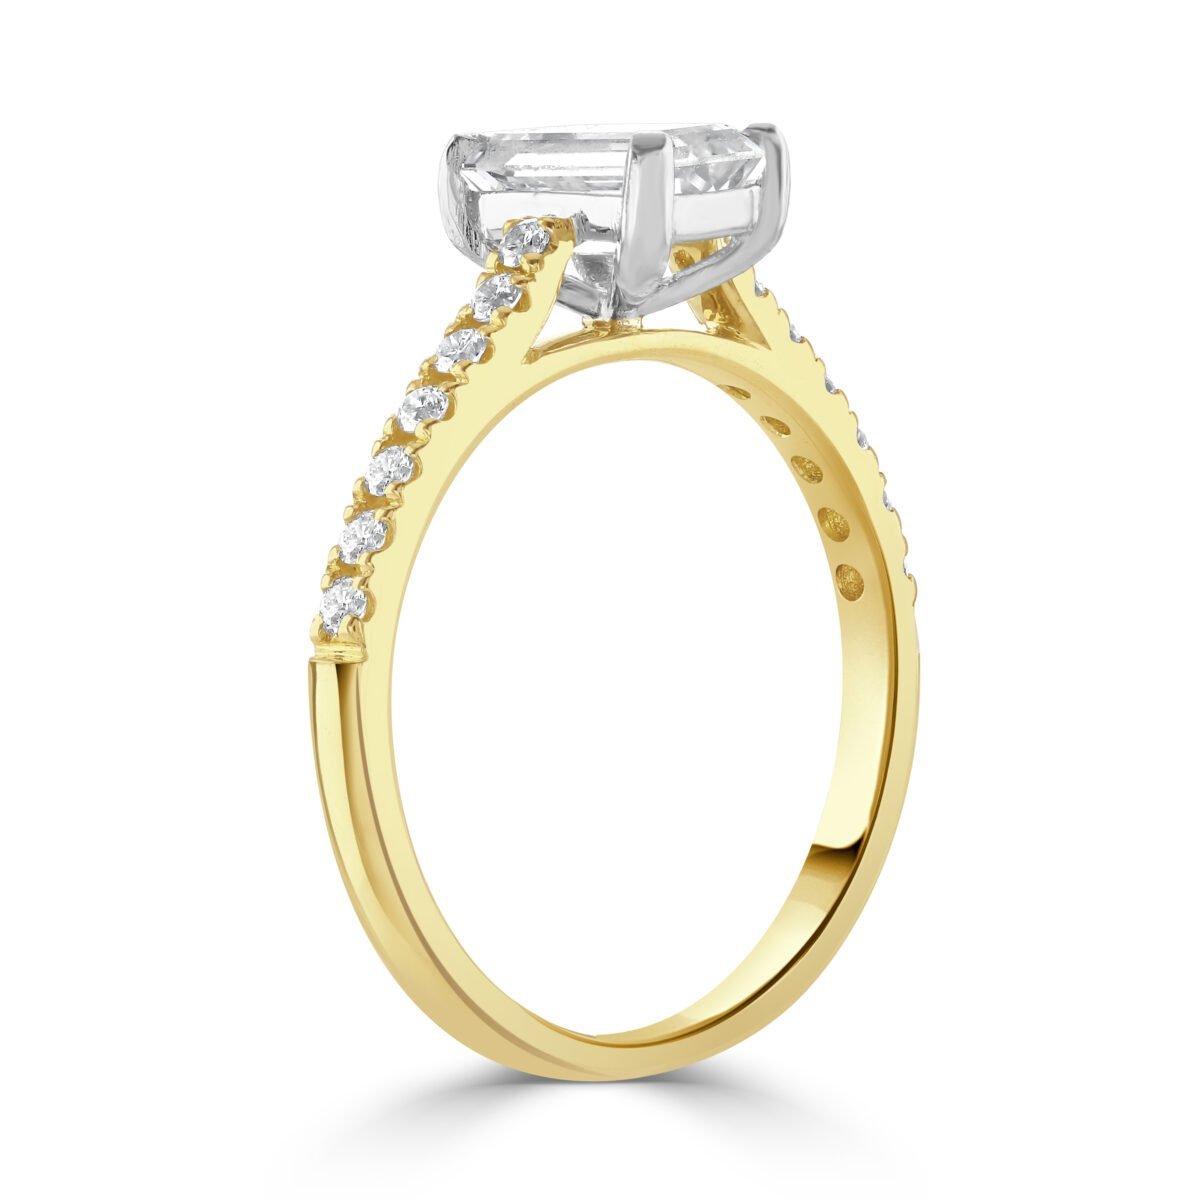 Emerald Cut Yellow Gold Diamond Ring with Diamond set shoulders